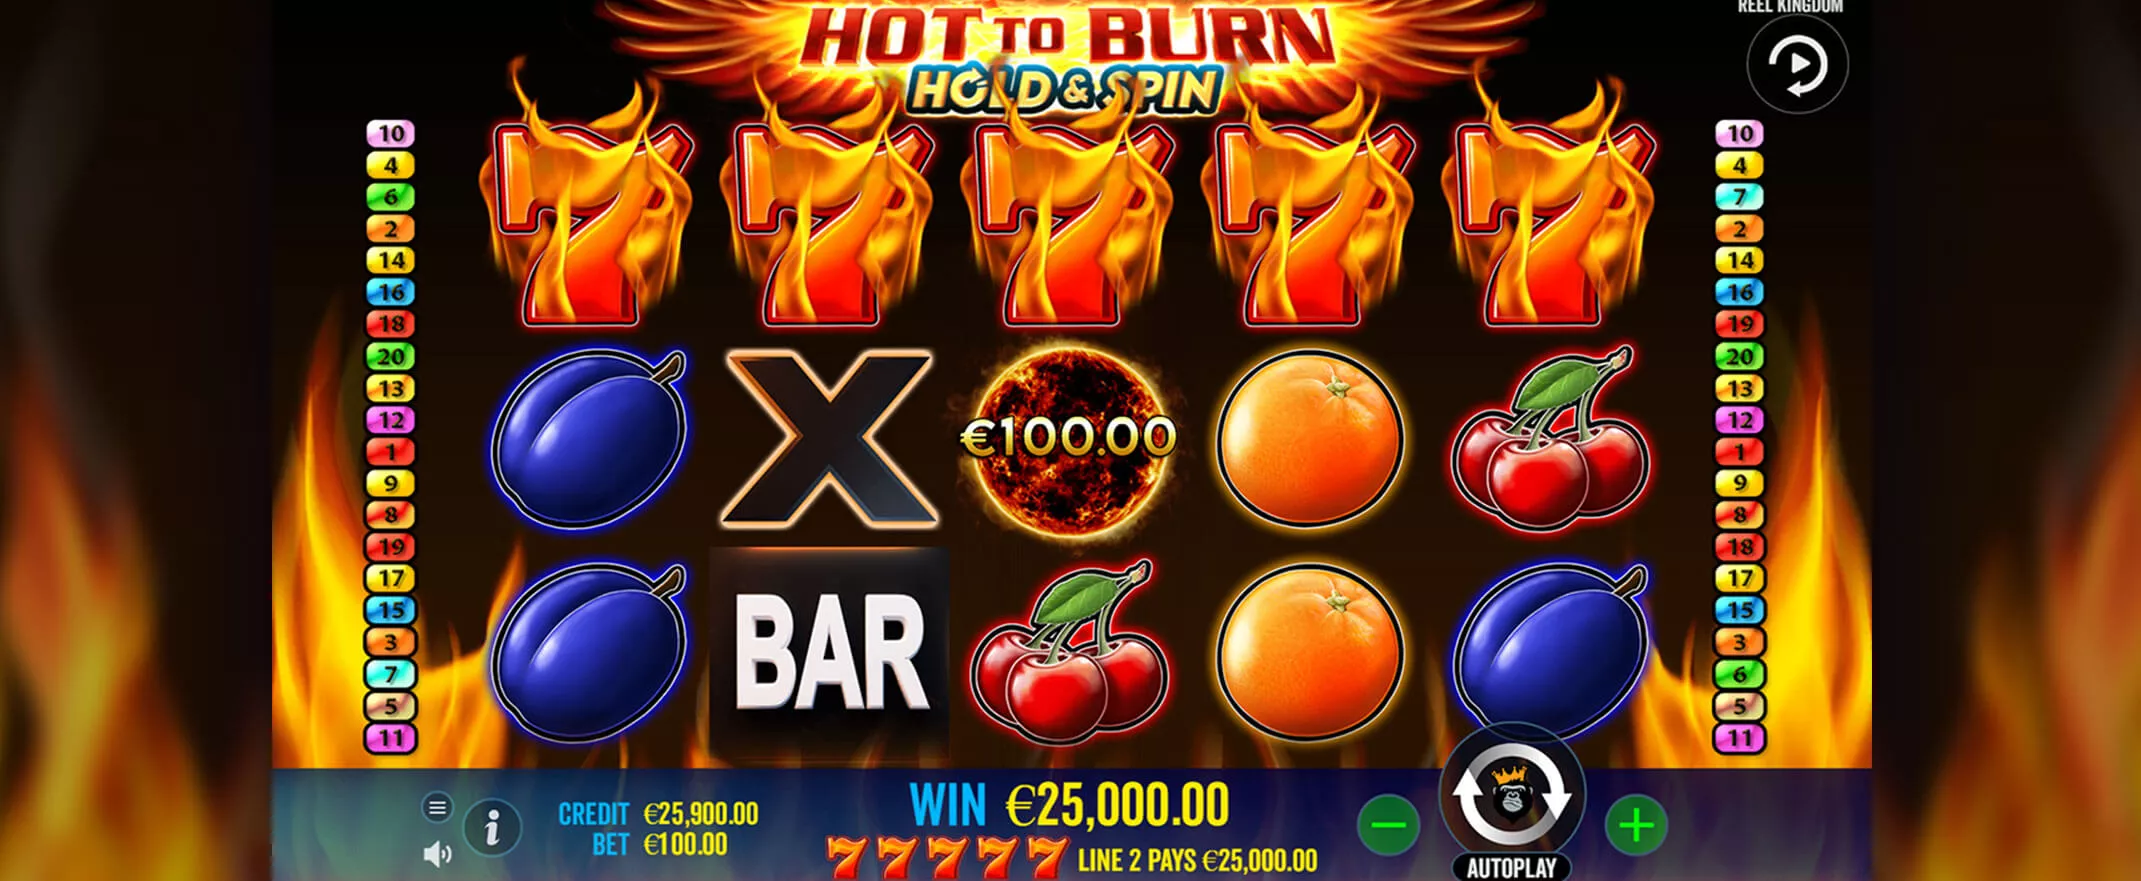 Hot to Burn Hold & Win slot screenshot of the reels